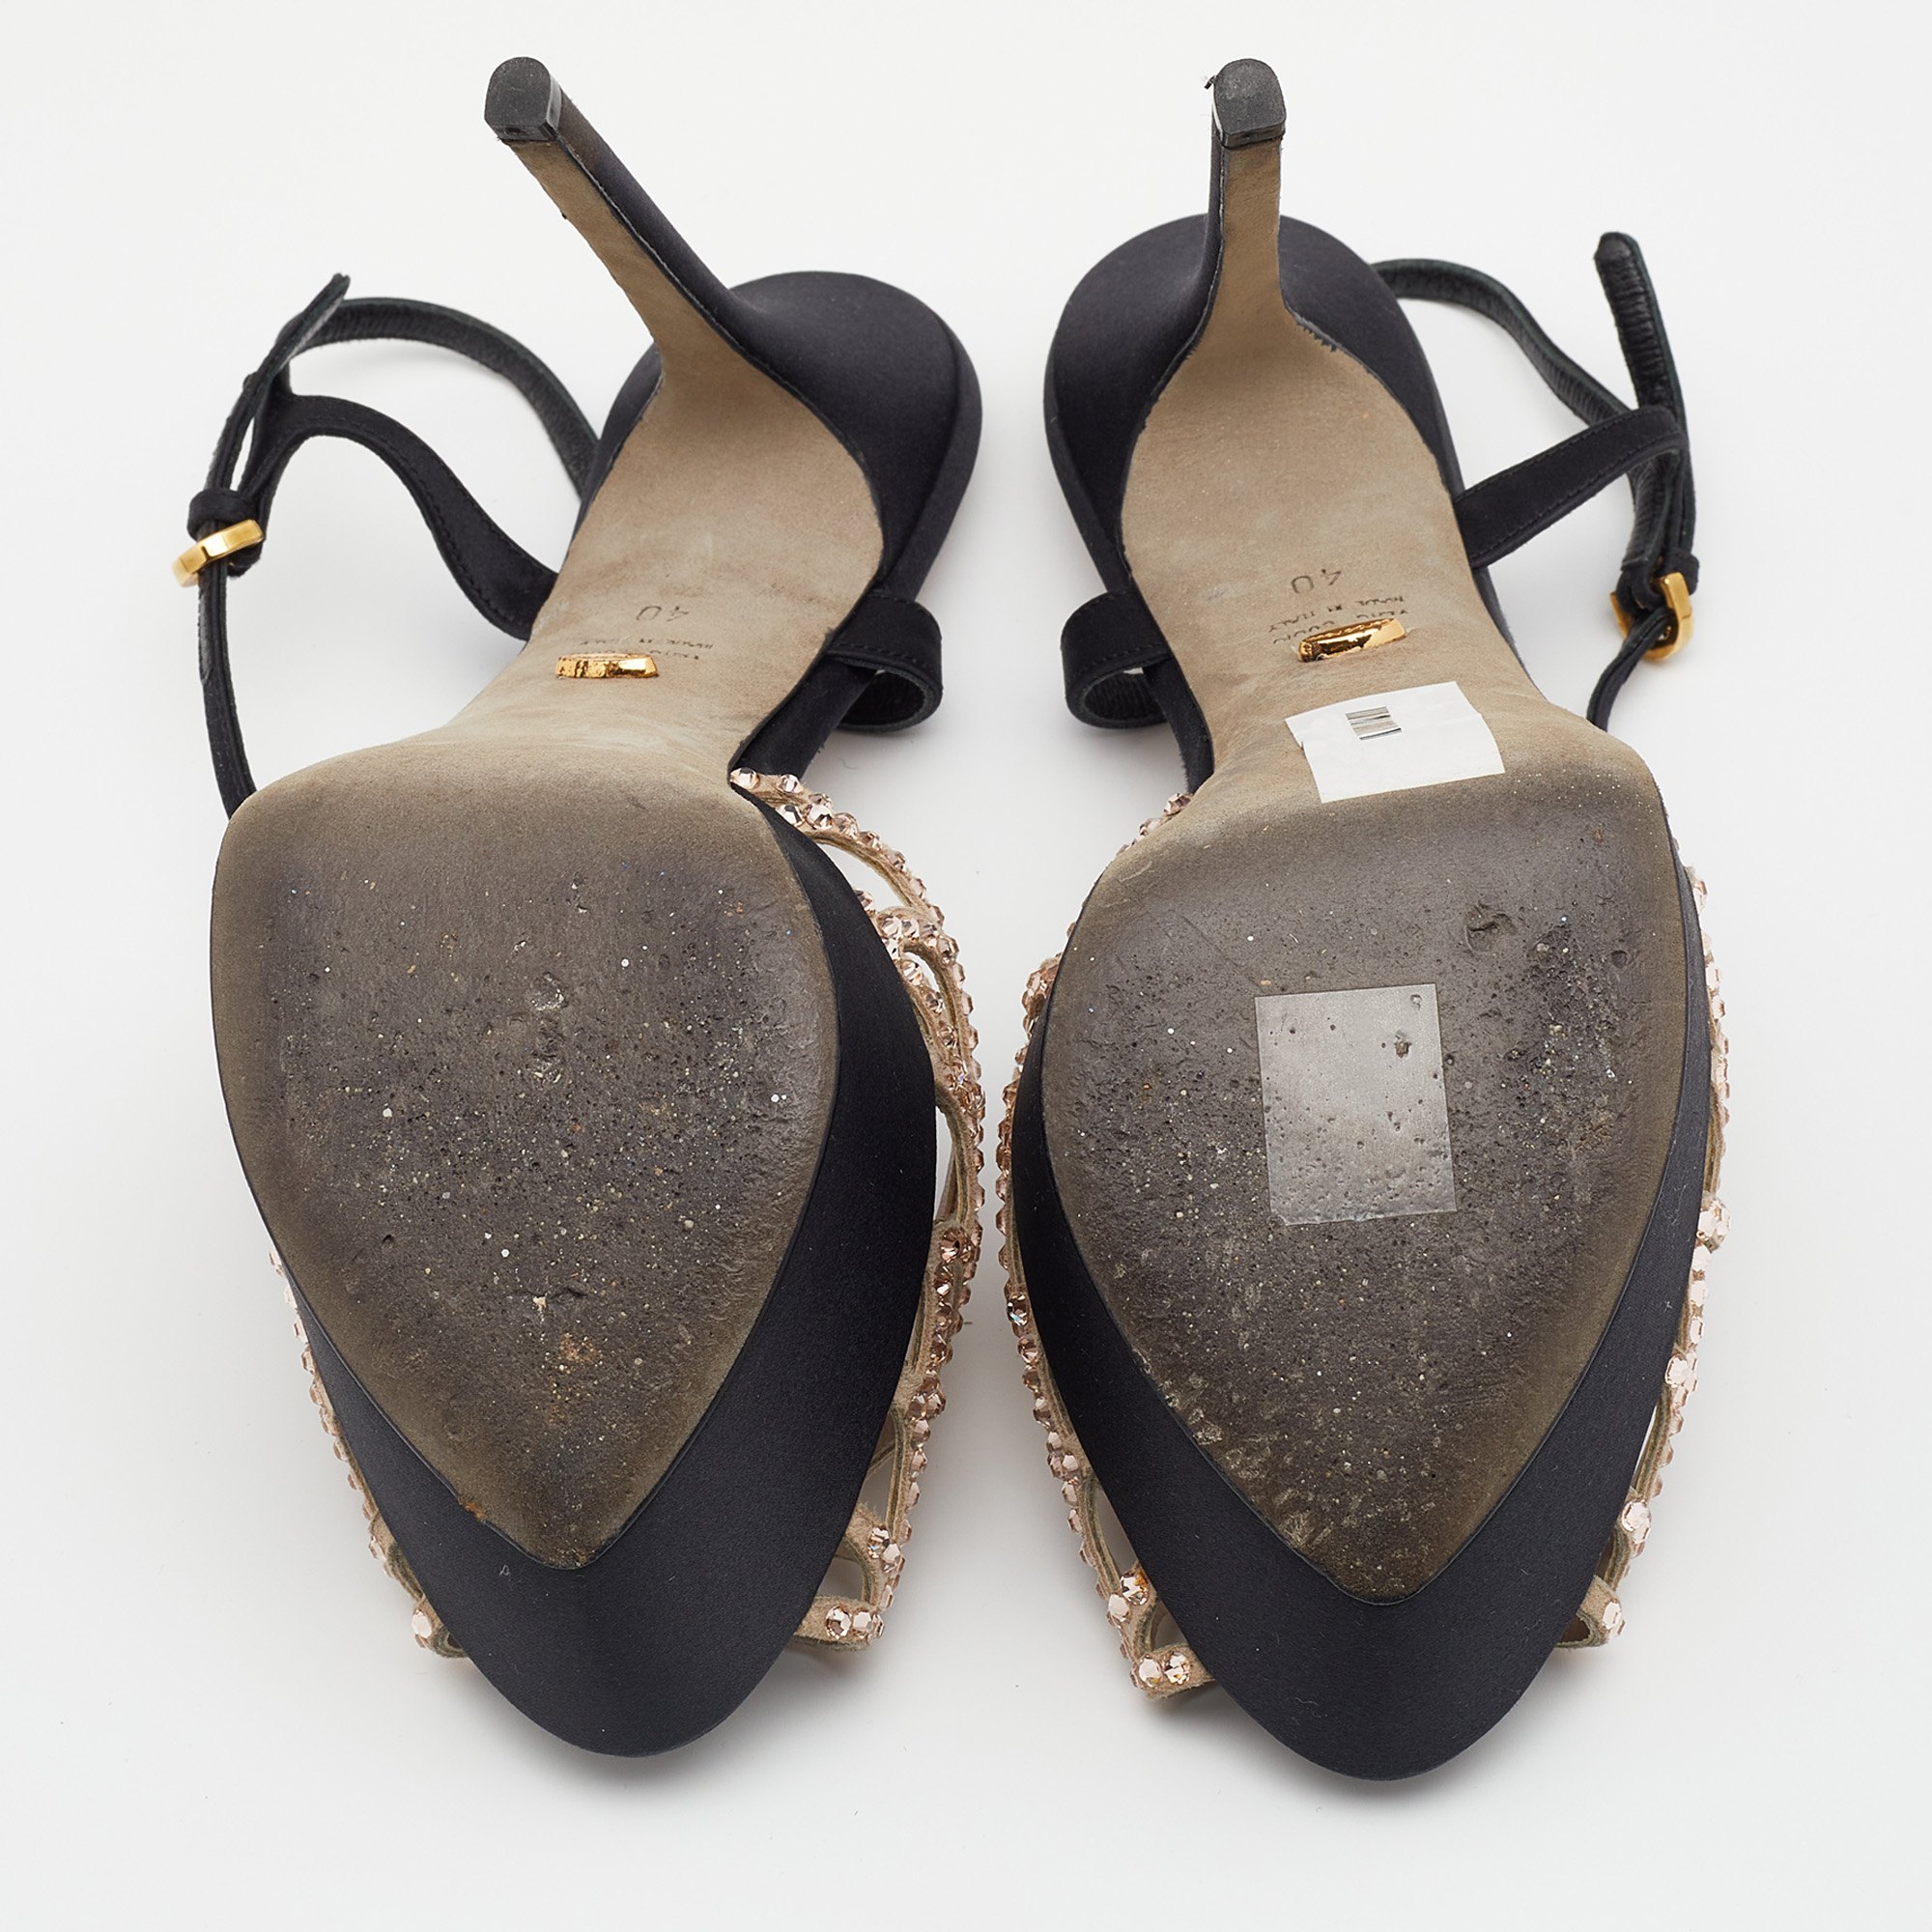 Sergio Rossi Black/Beige Satin And Suede Crystal Embellished Strappy Scalloped Platform Sandals Size 40